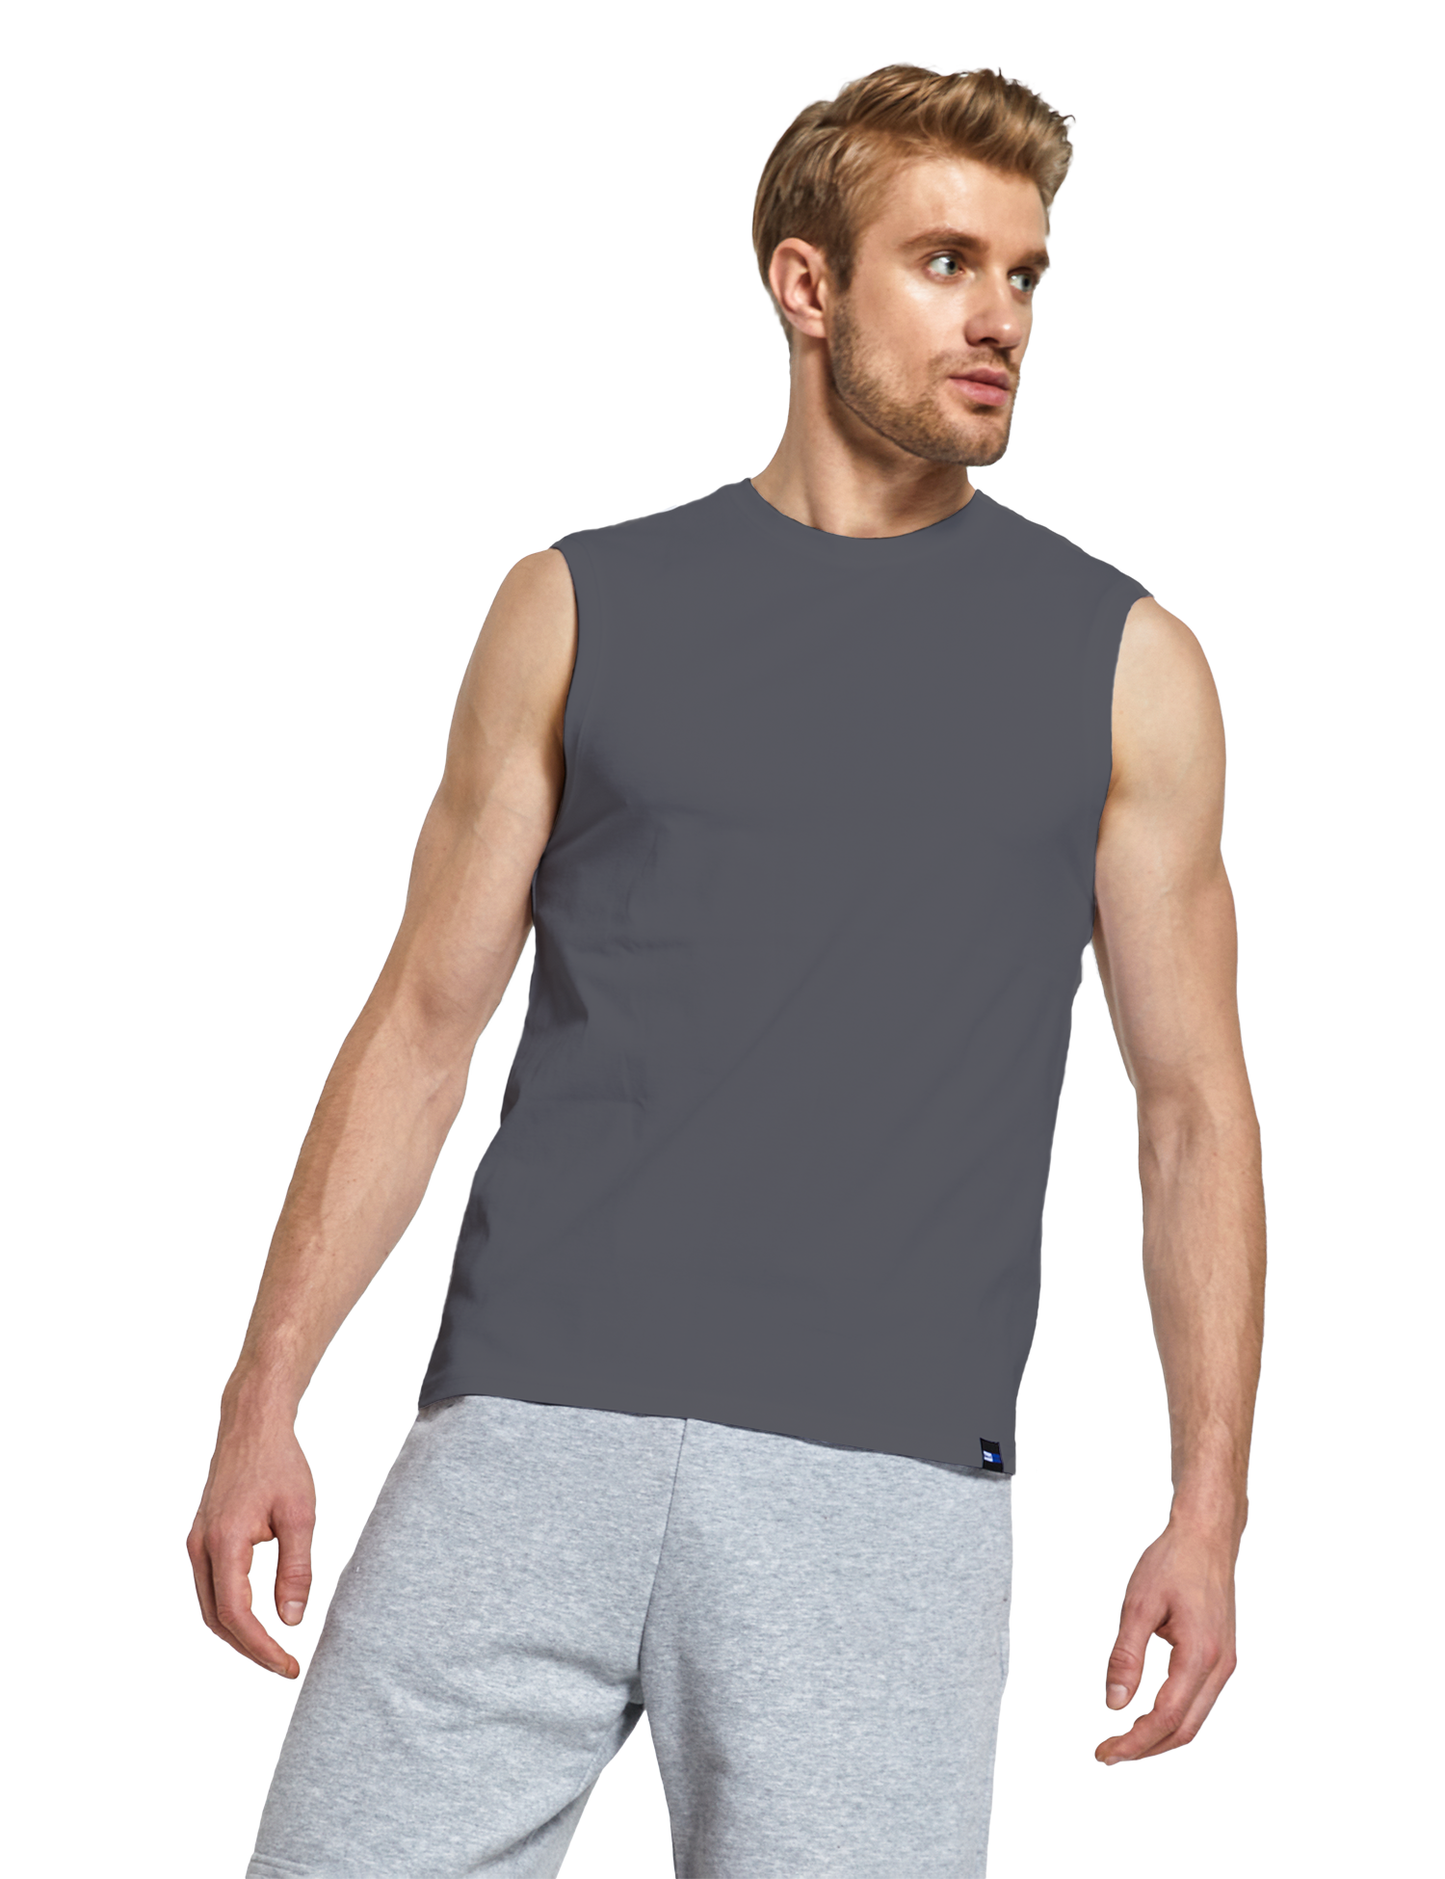 mens sleeveless shirts dark grey